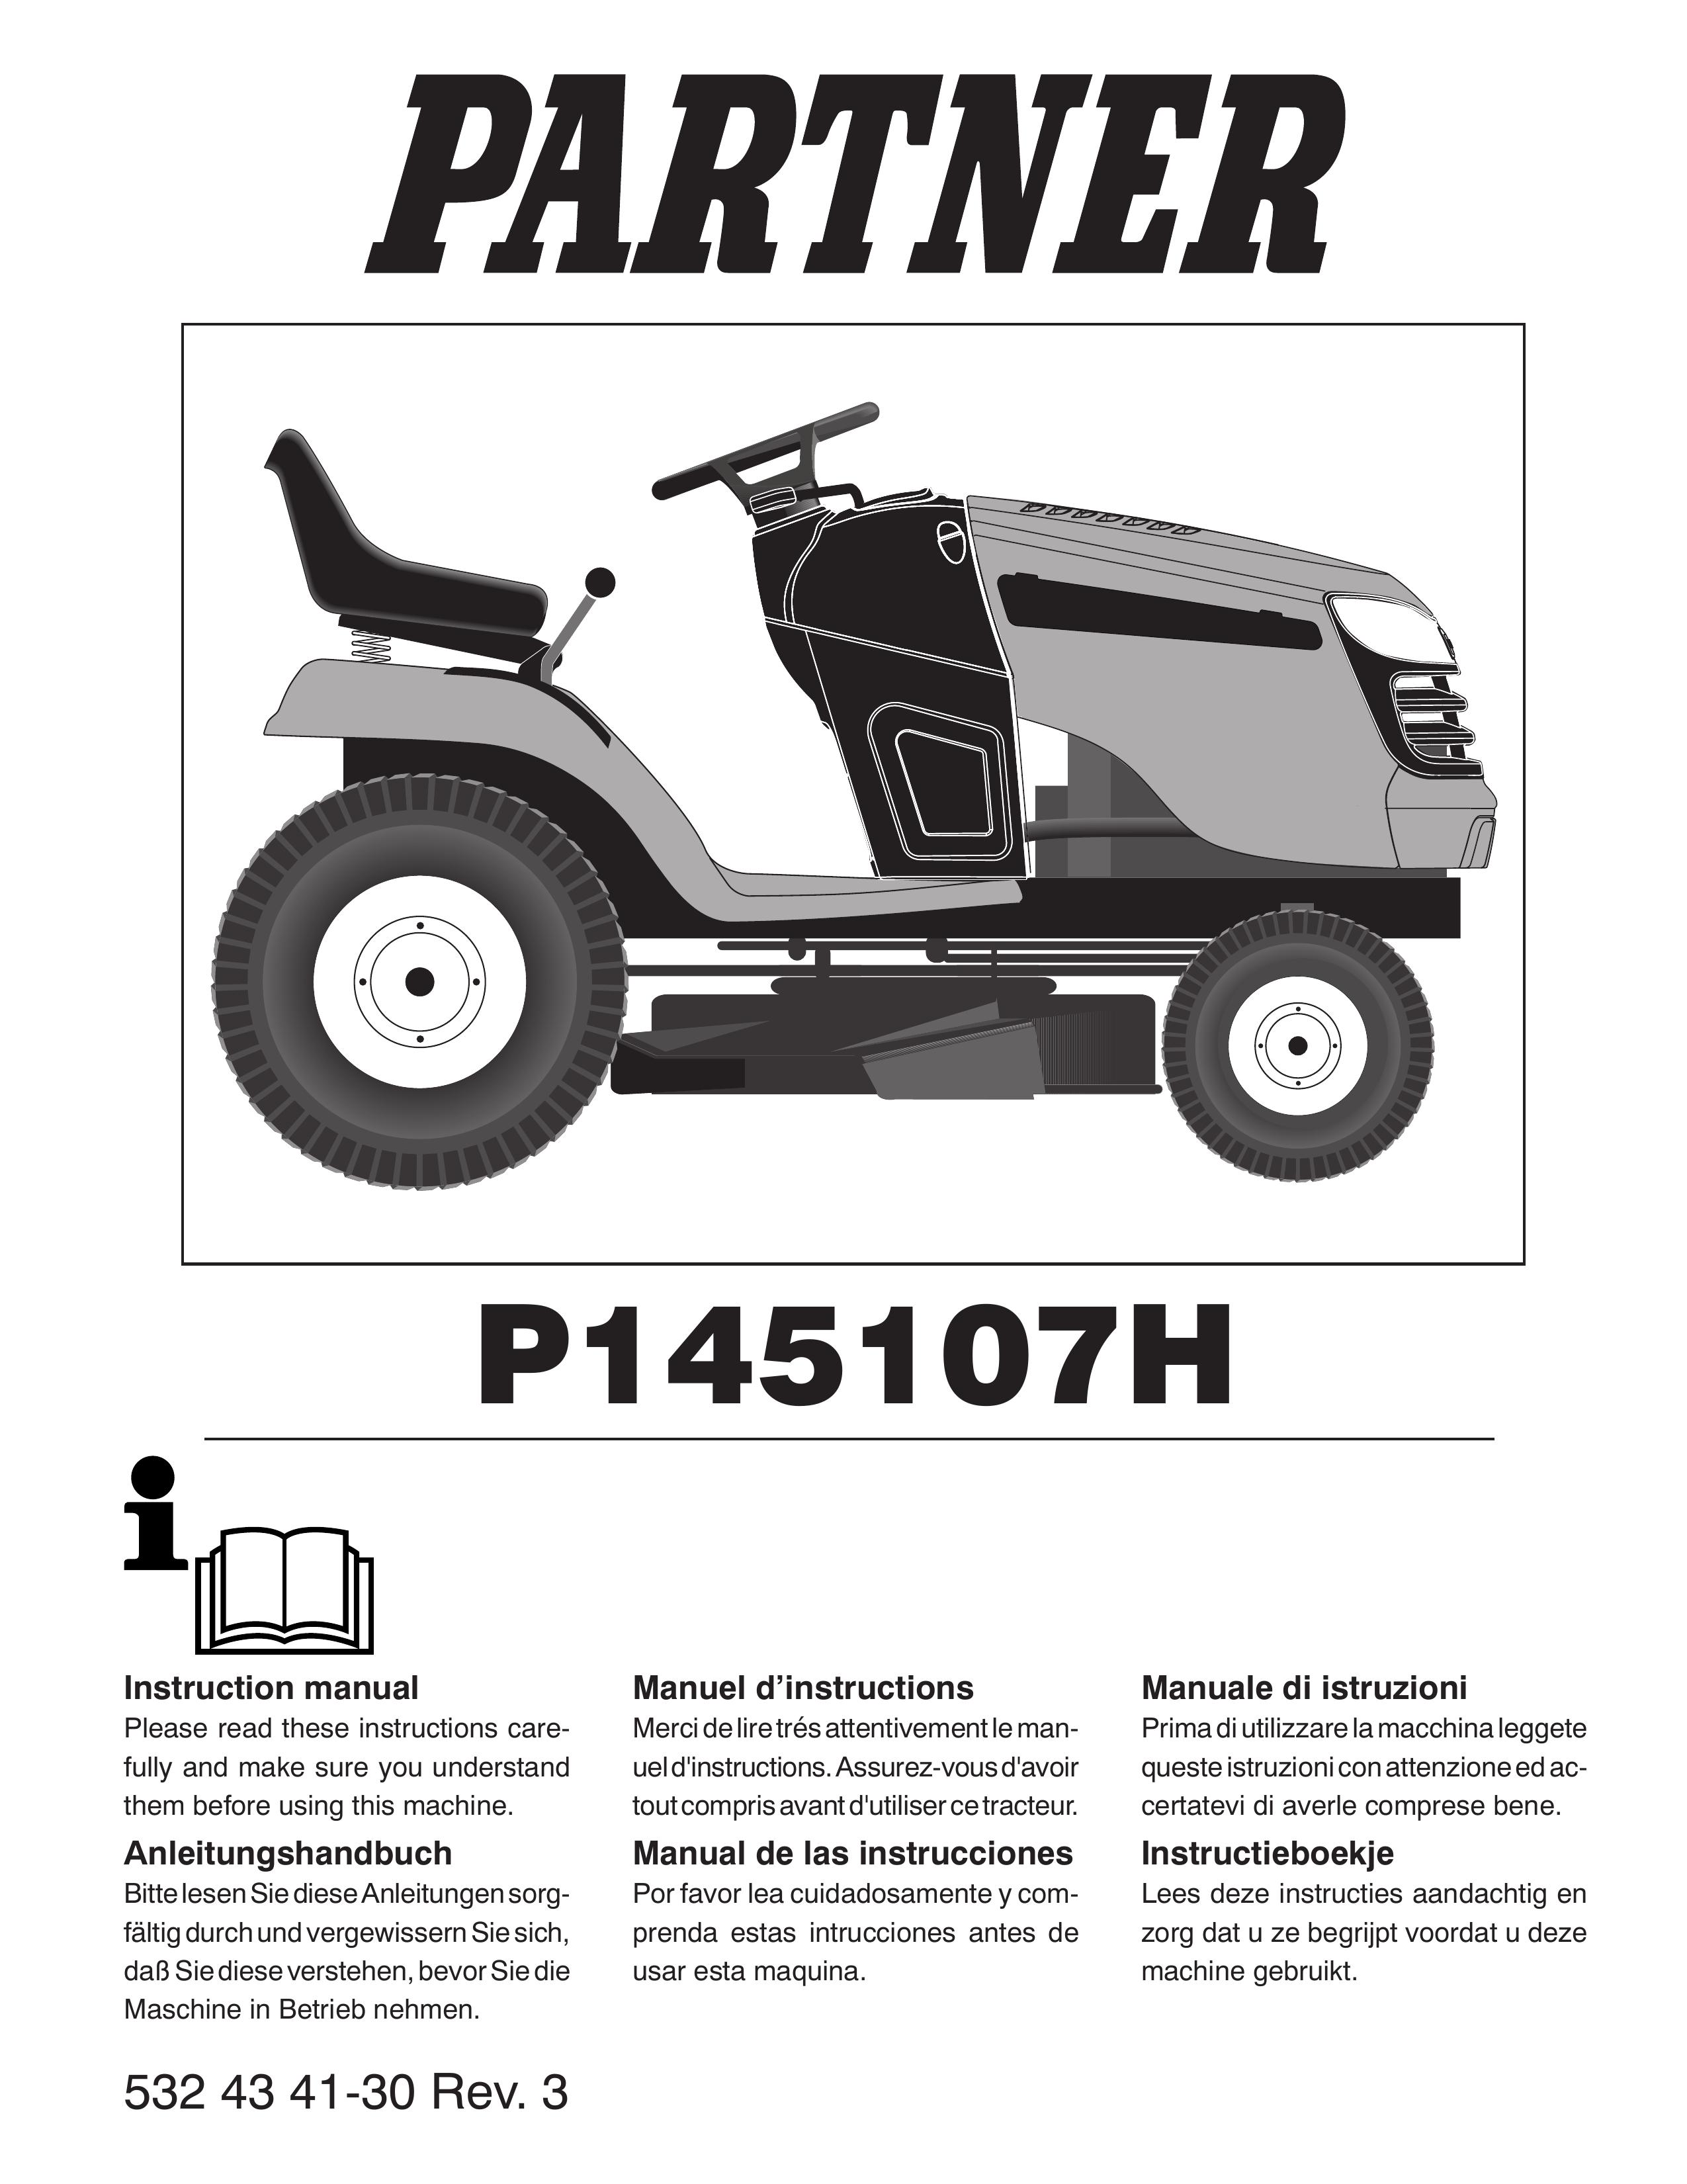 Partner Tech P145107H Lawn Mower User Manual